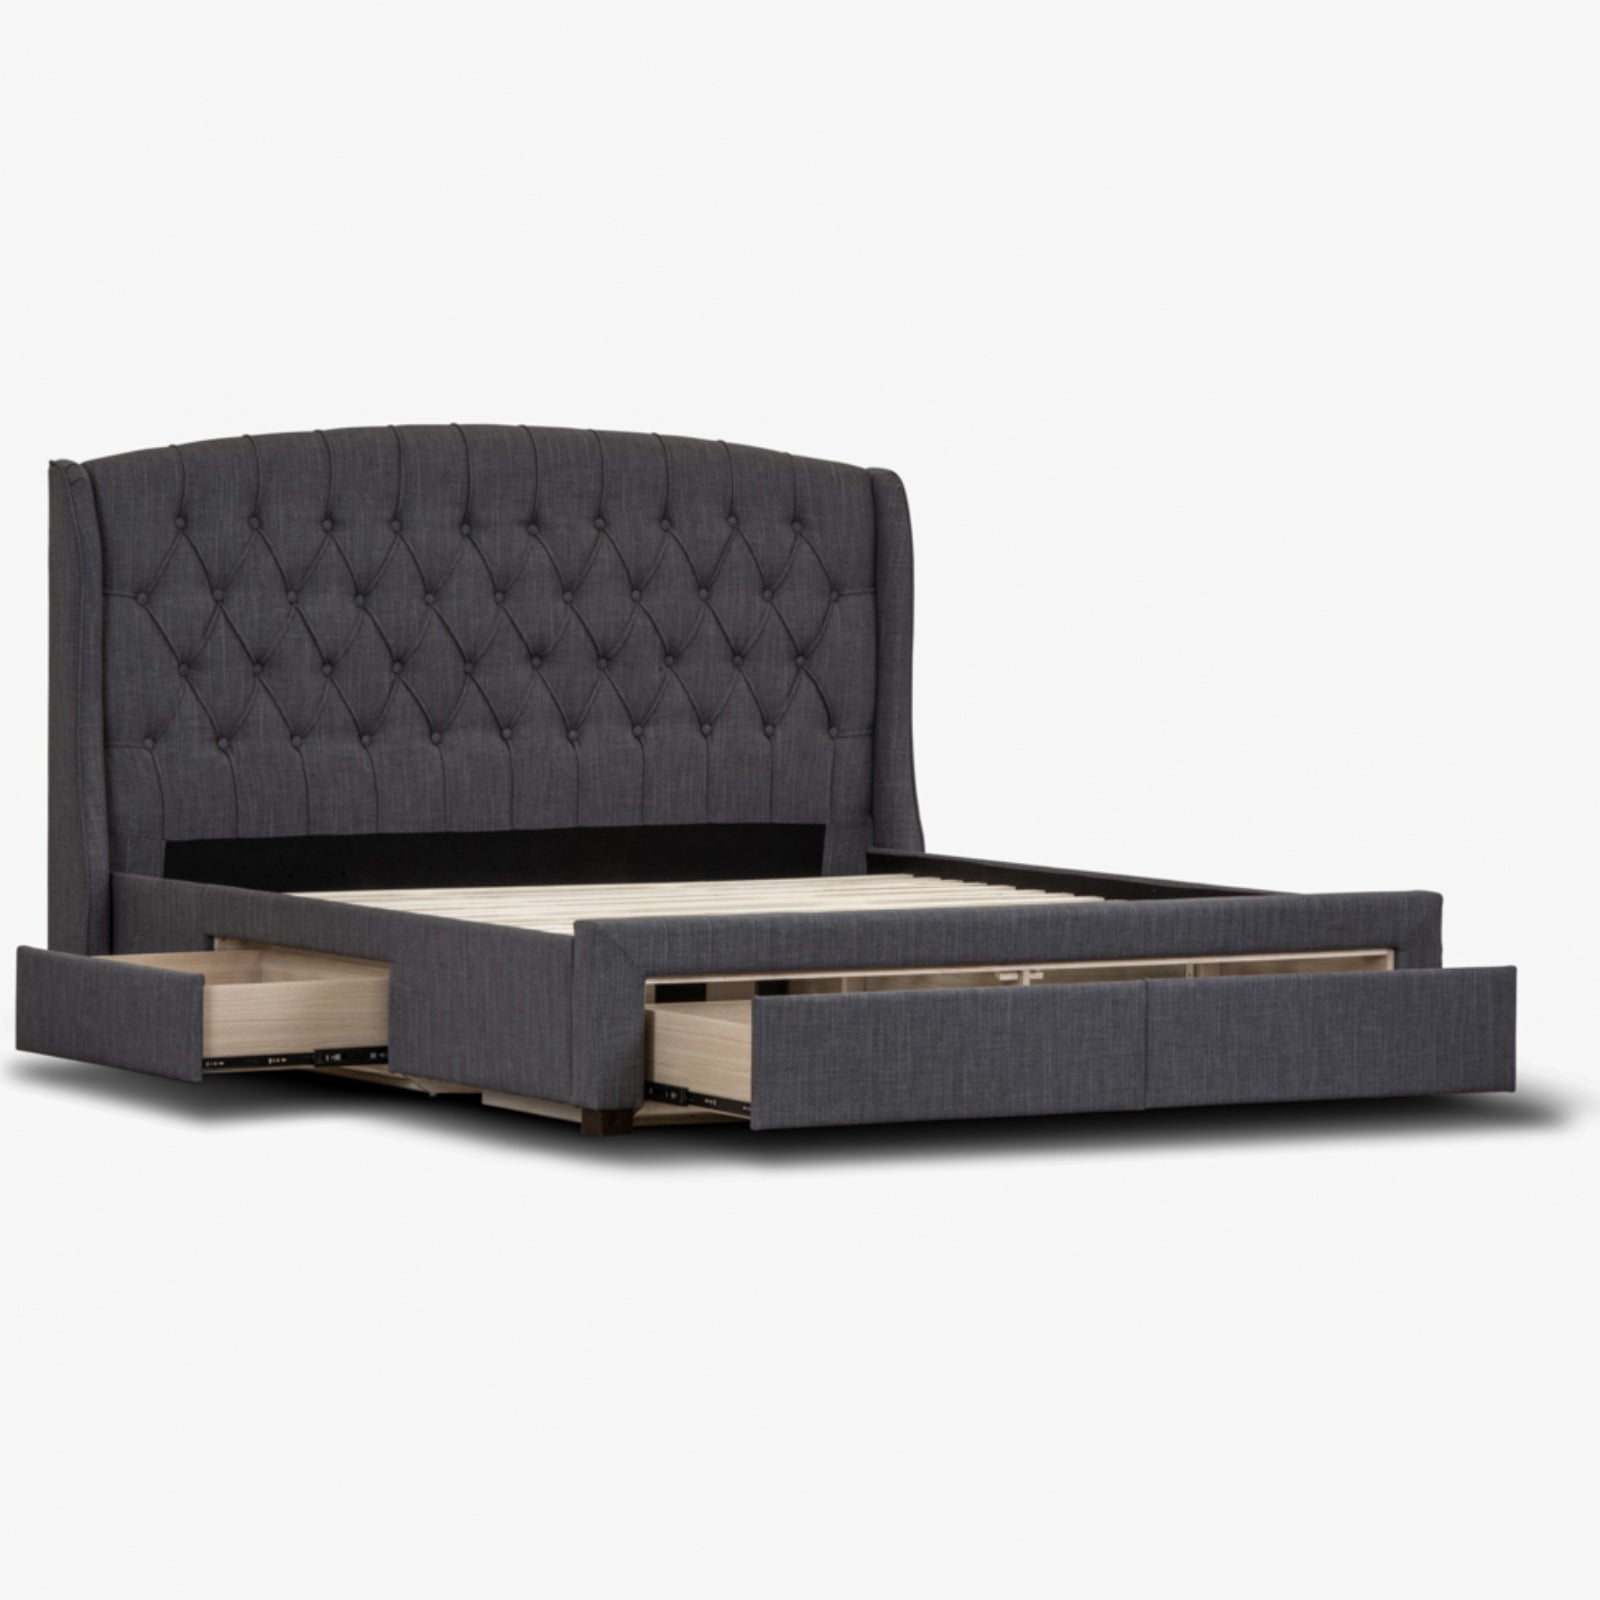 Honeydew King Size Bed Frame Timber Mattress Base With Storage Drawers - Grey